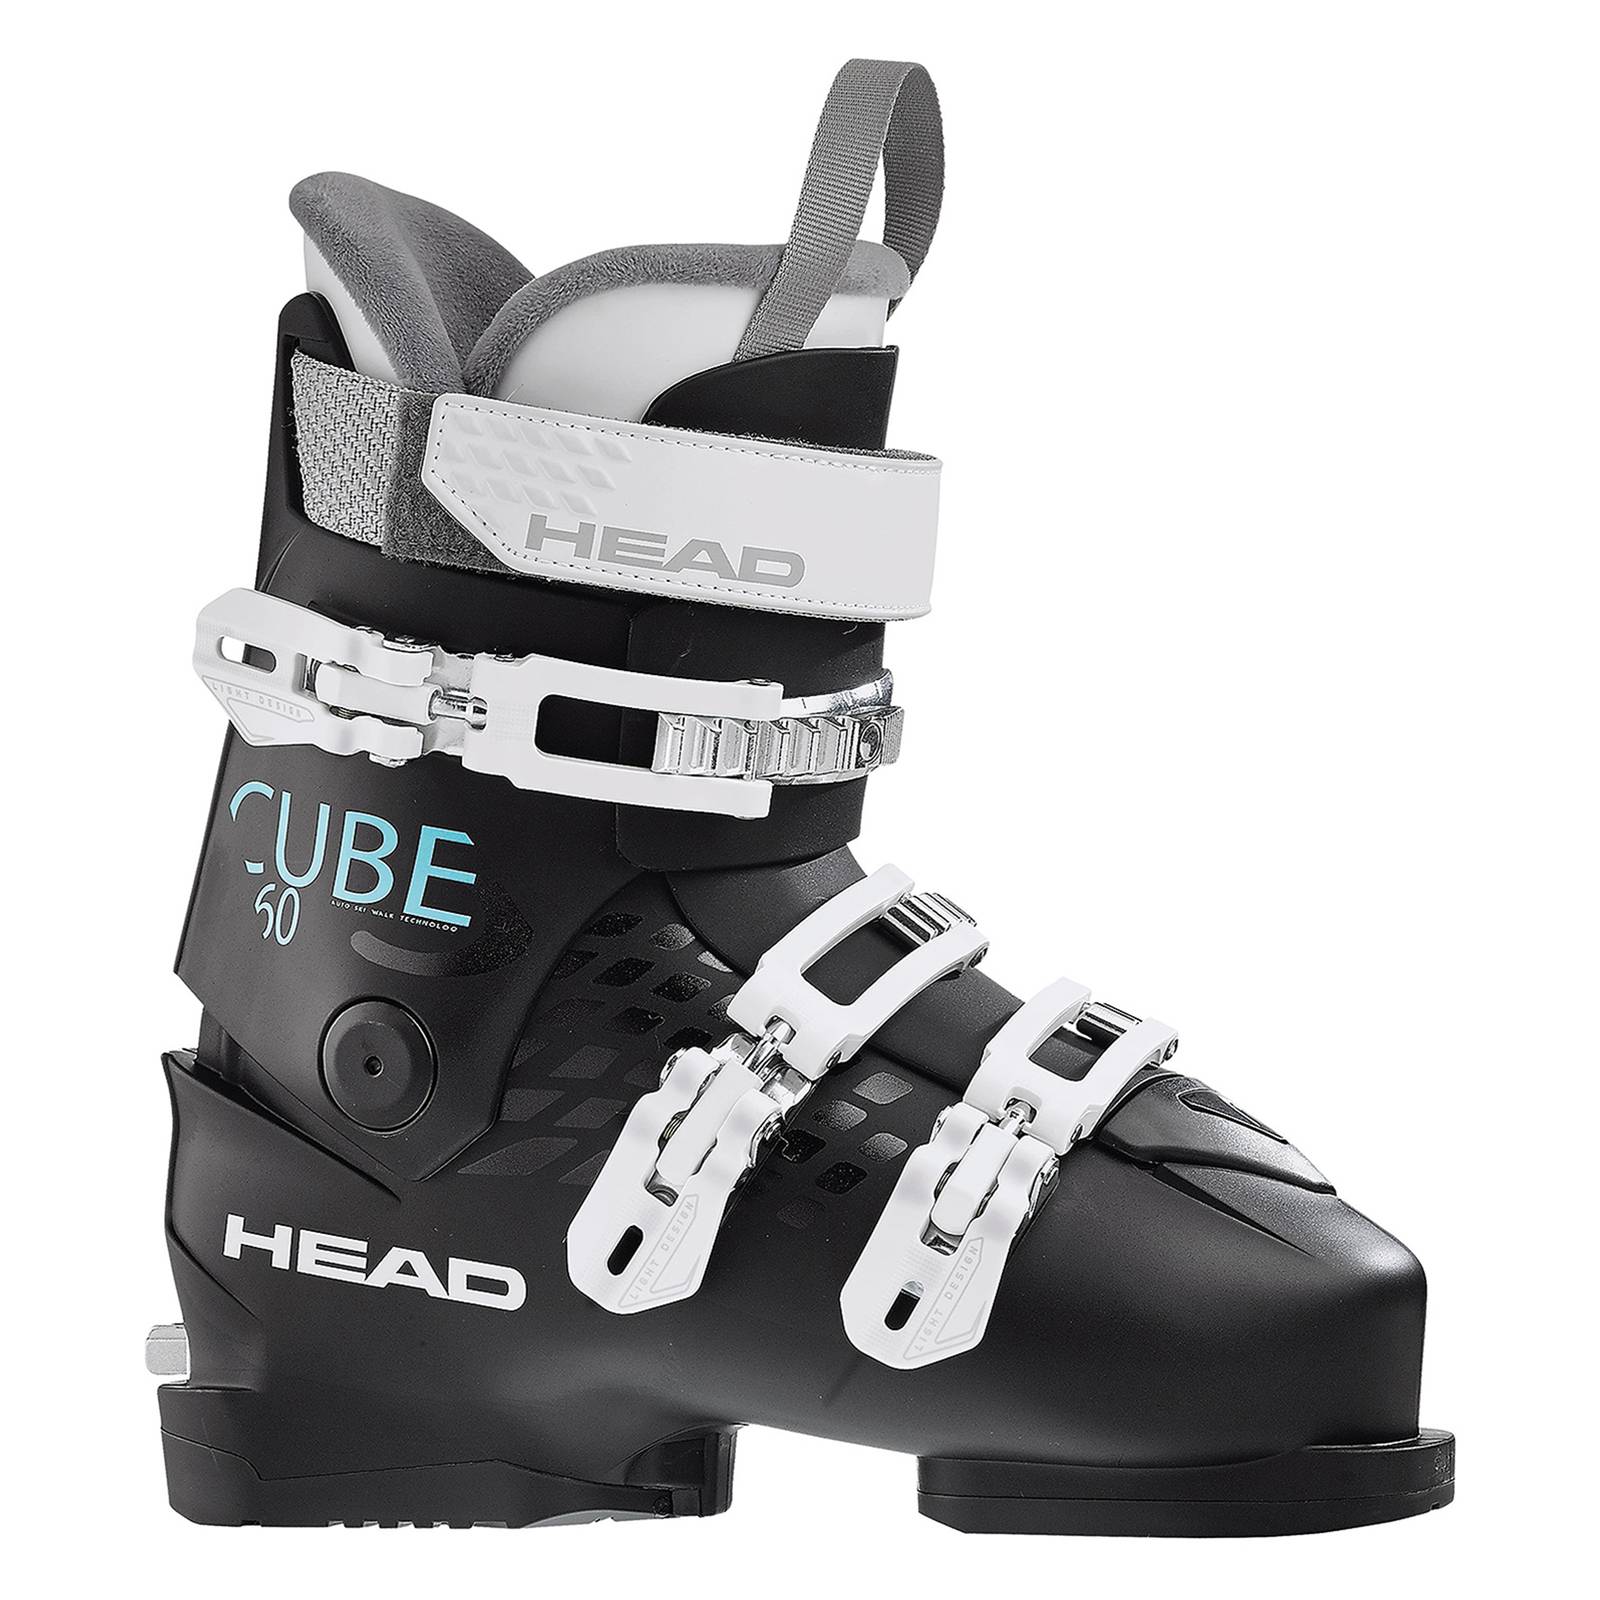 HEAD Cube 3 60 W Damen Skischuhe schwarz